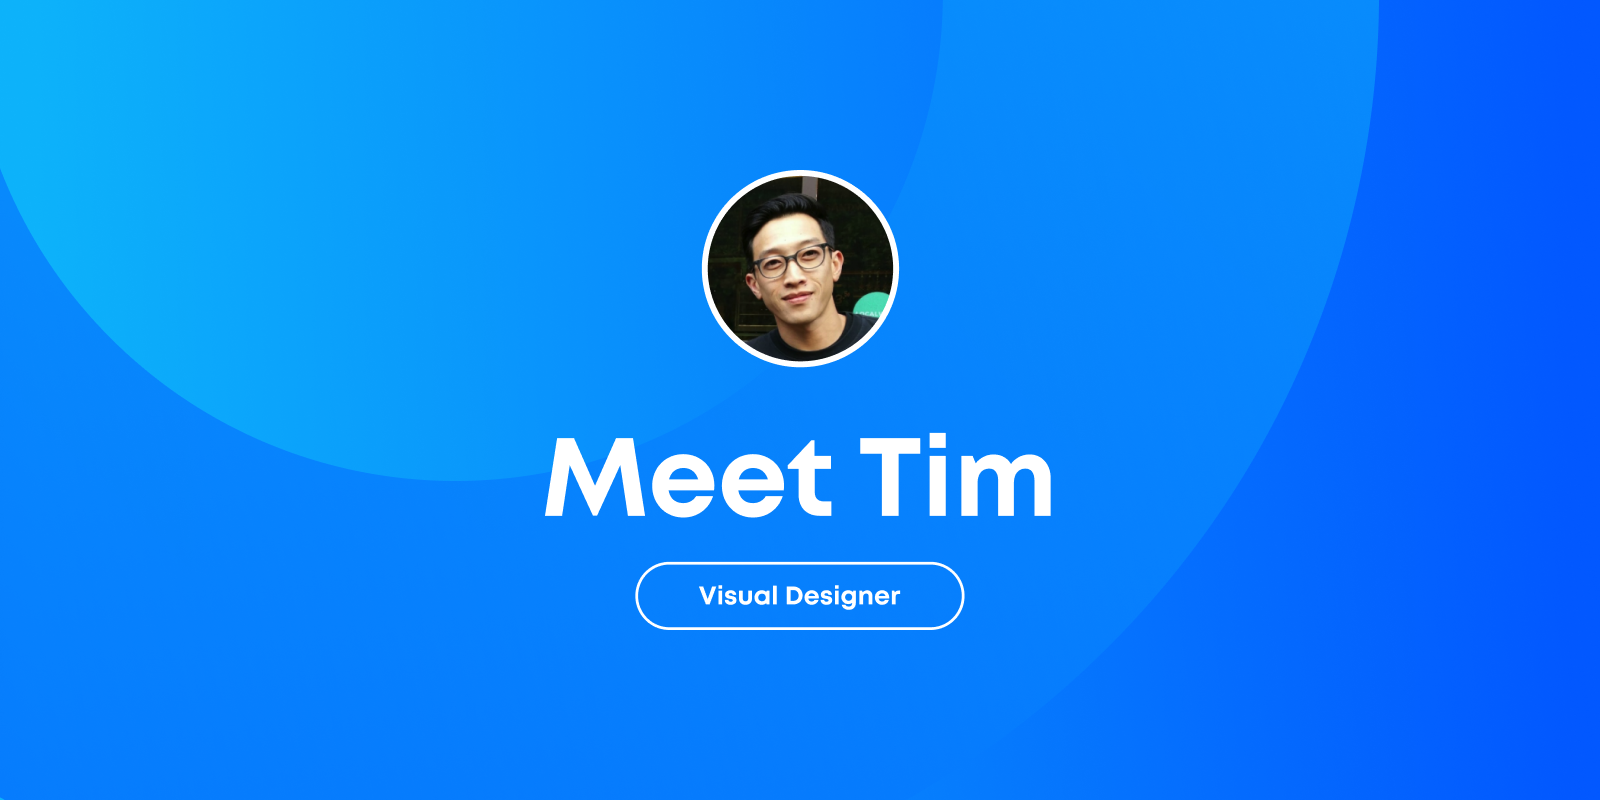 Meet Tim visual designer